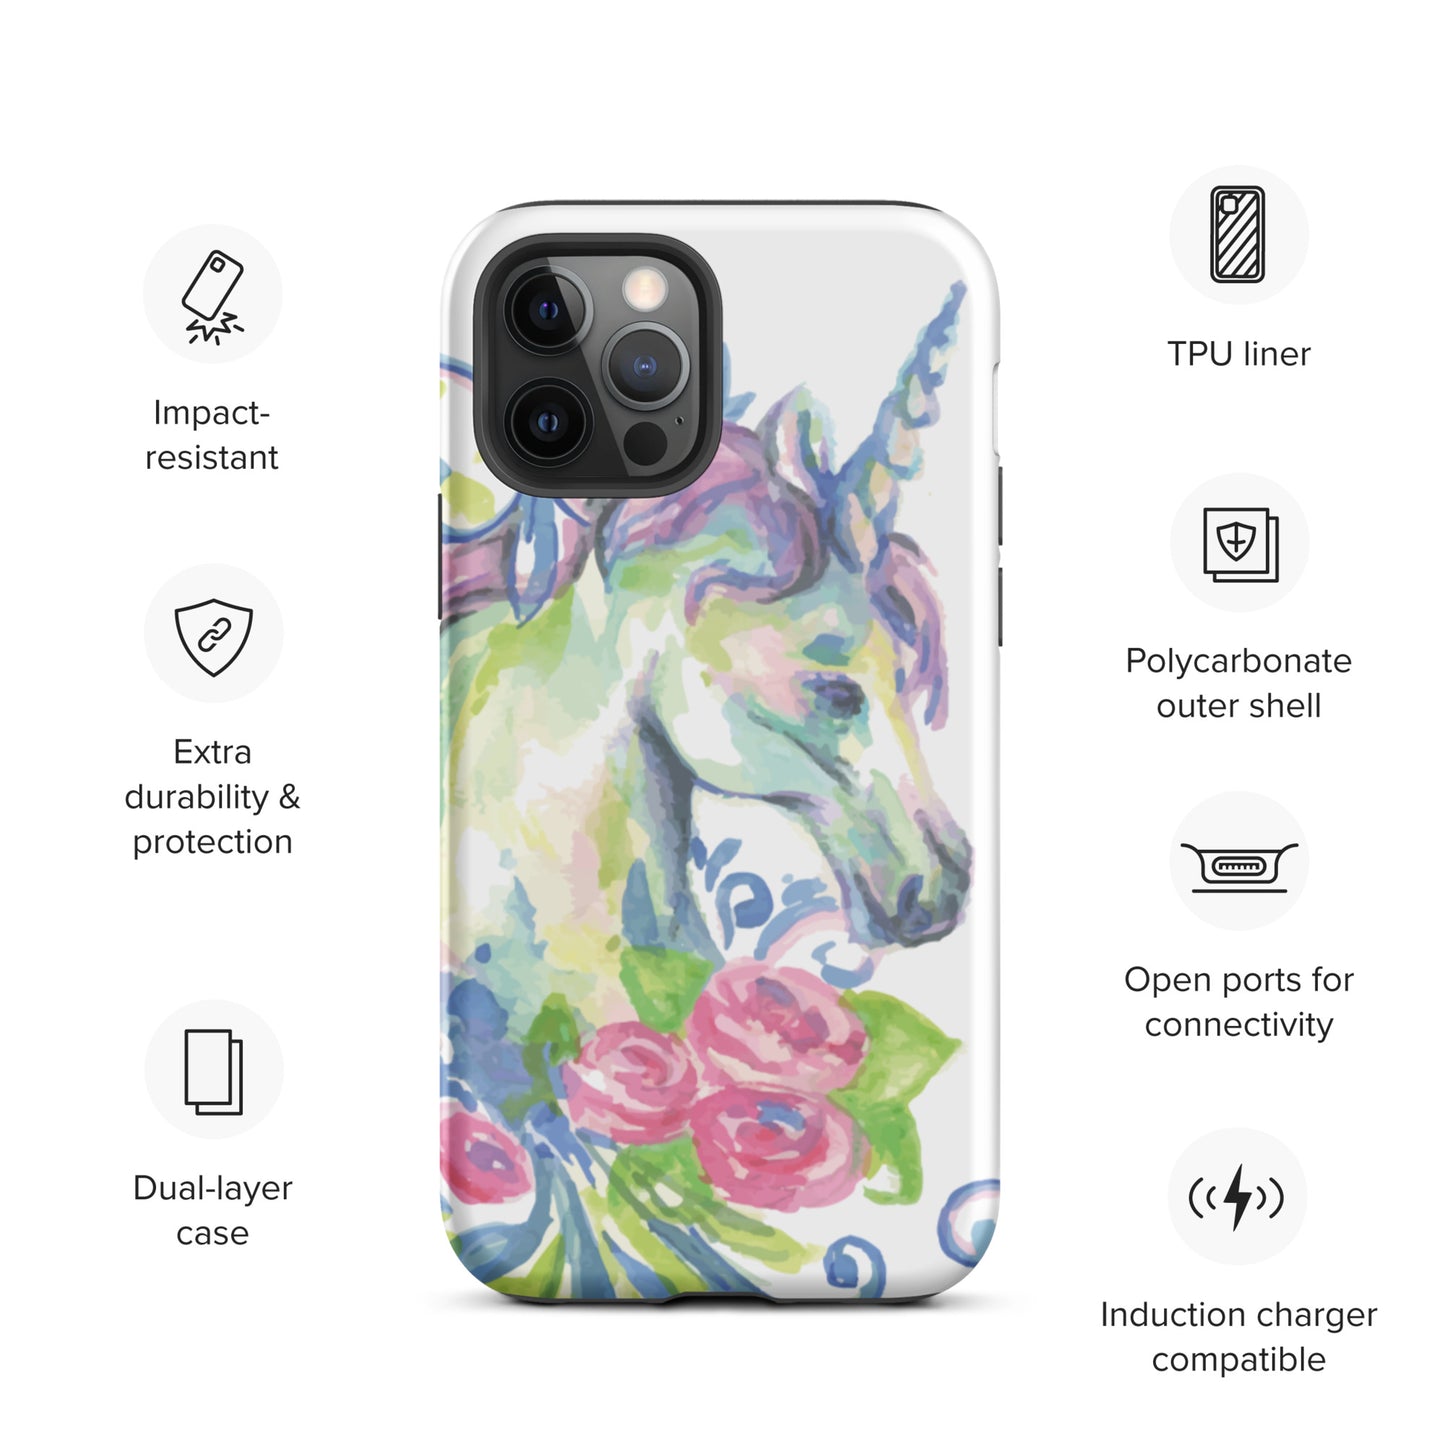 Unicorn Tough iPhone case